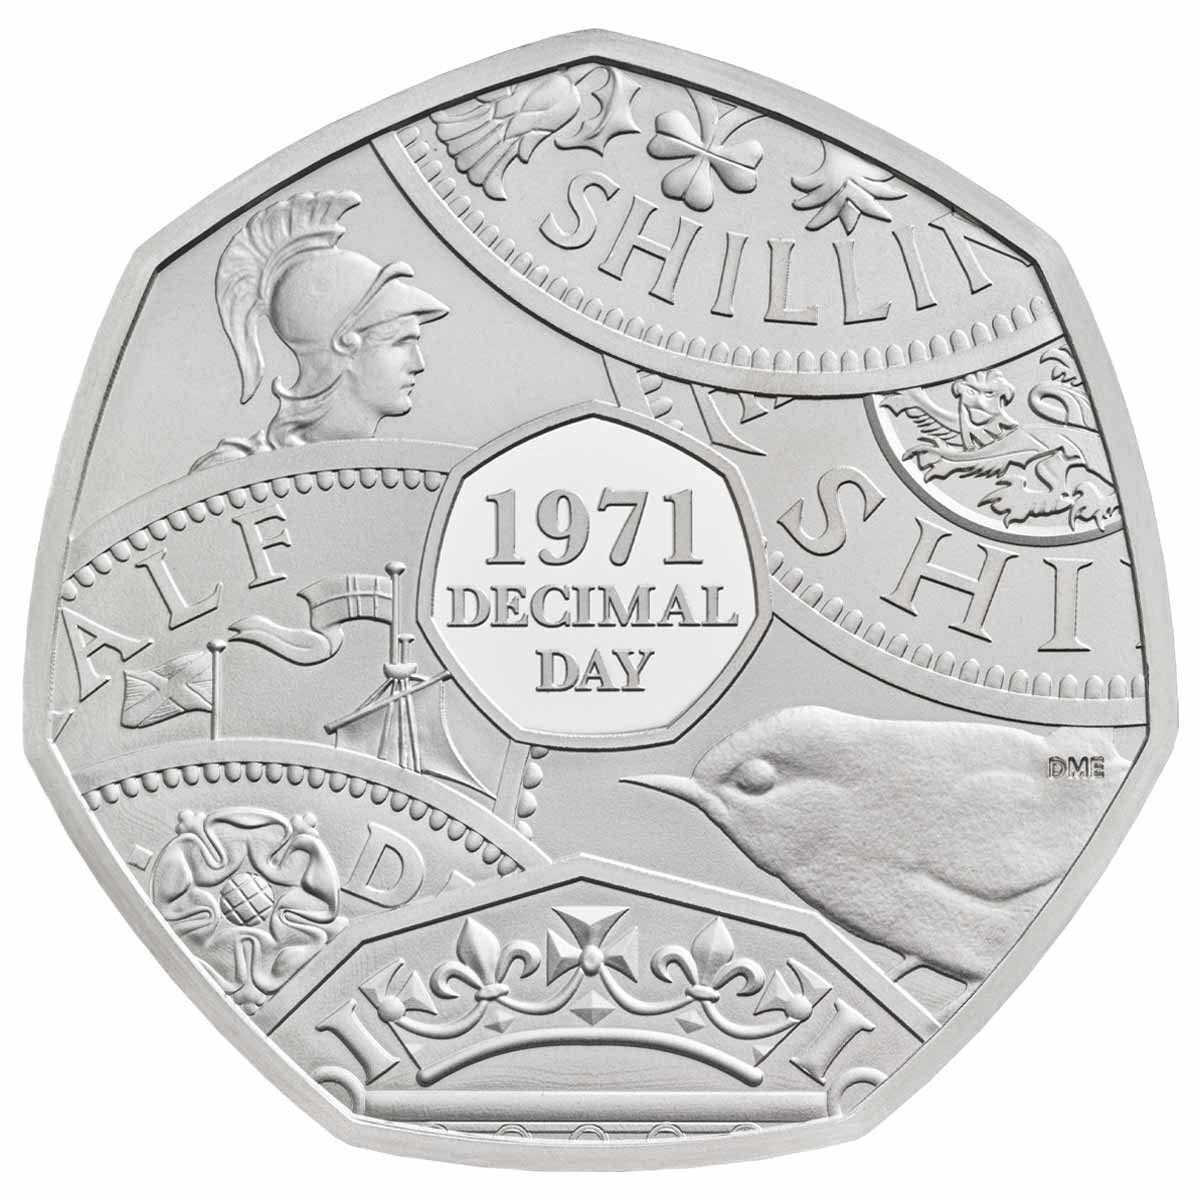 2021 50p Decimal Day Brilliant Uncirculated Coin